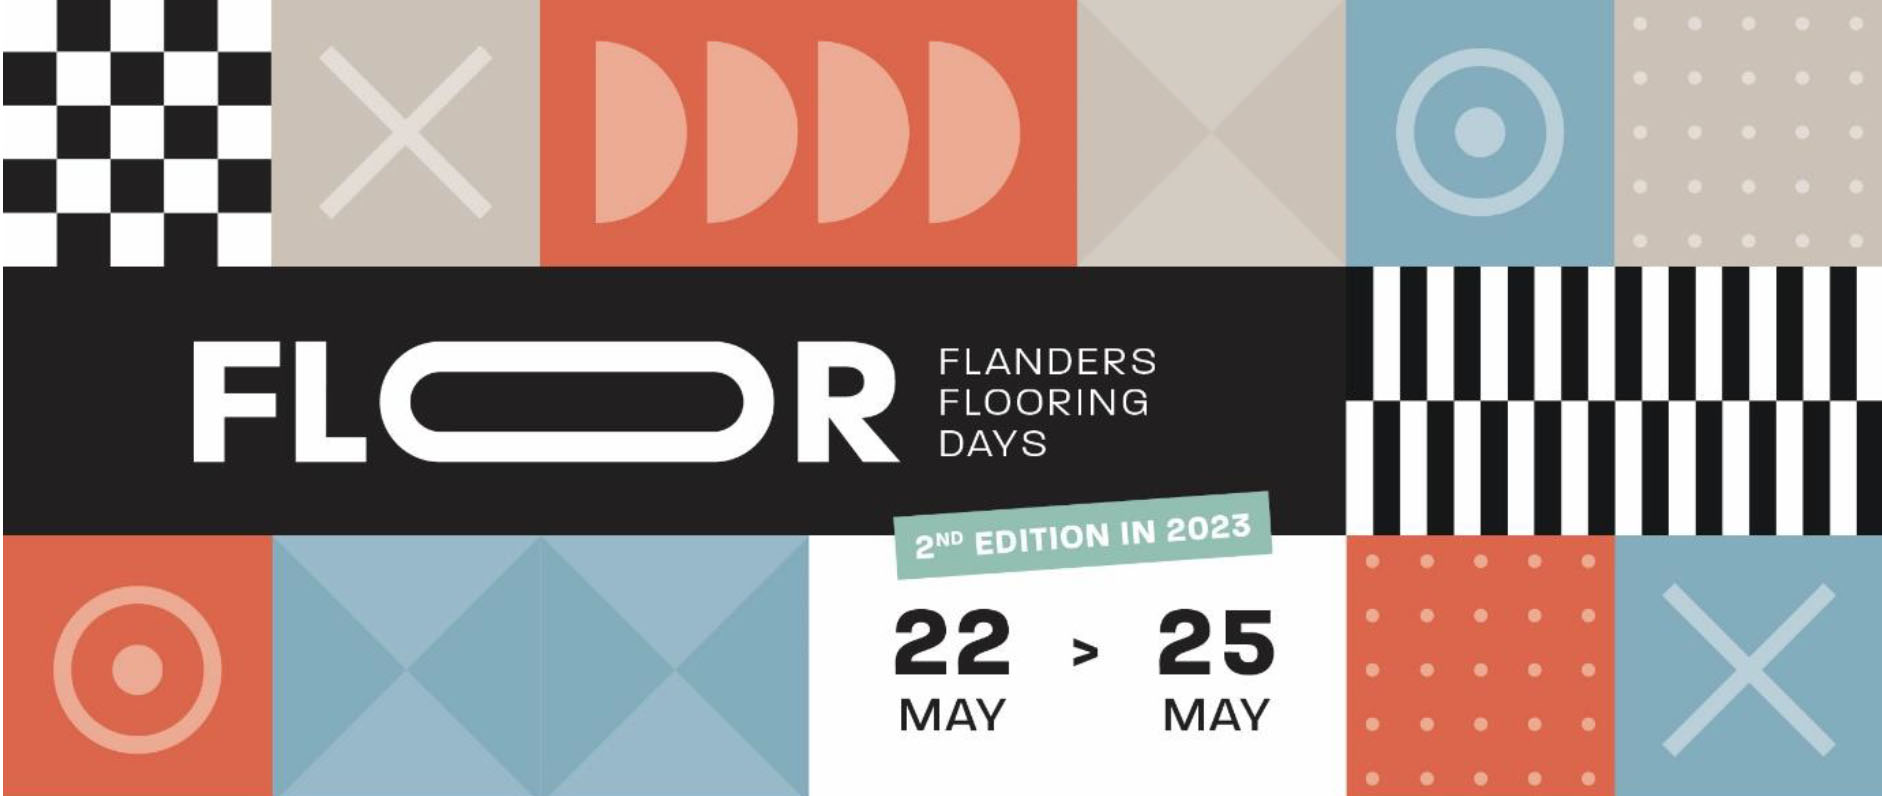 Flanders Flooring Days: Date confirmed for 2023